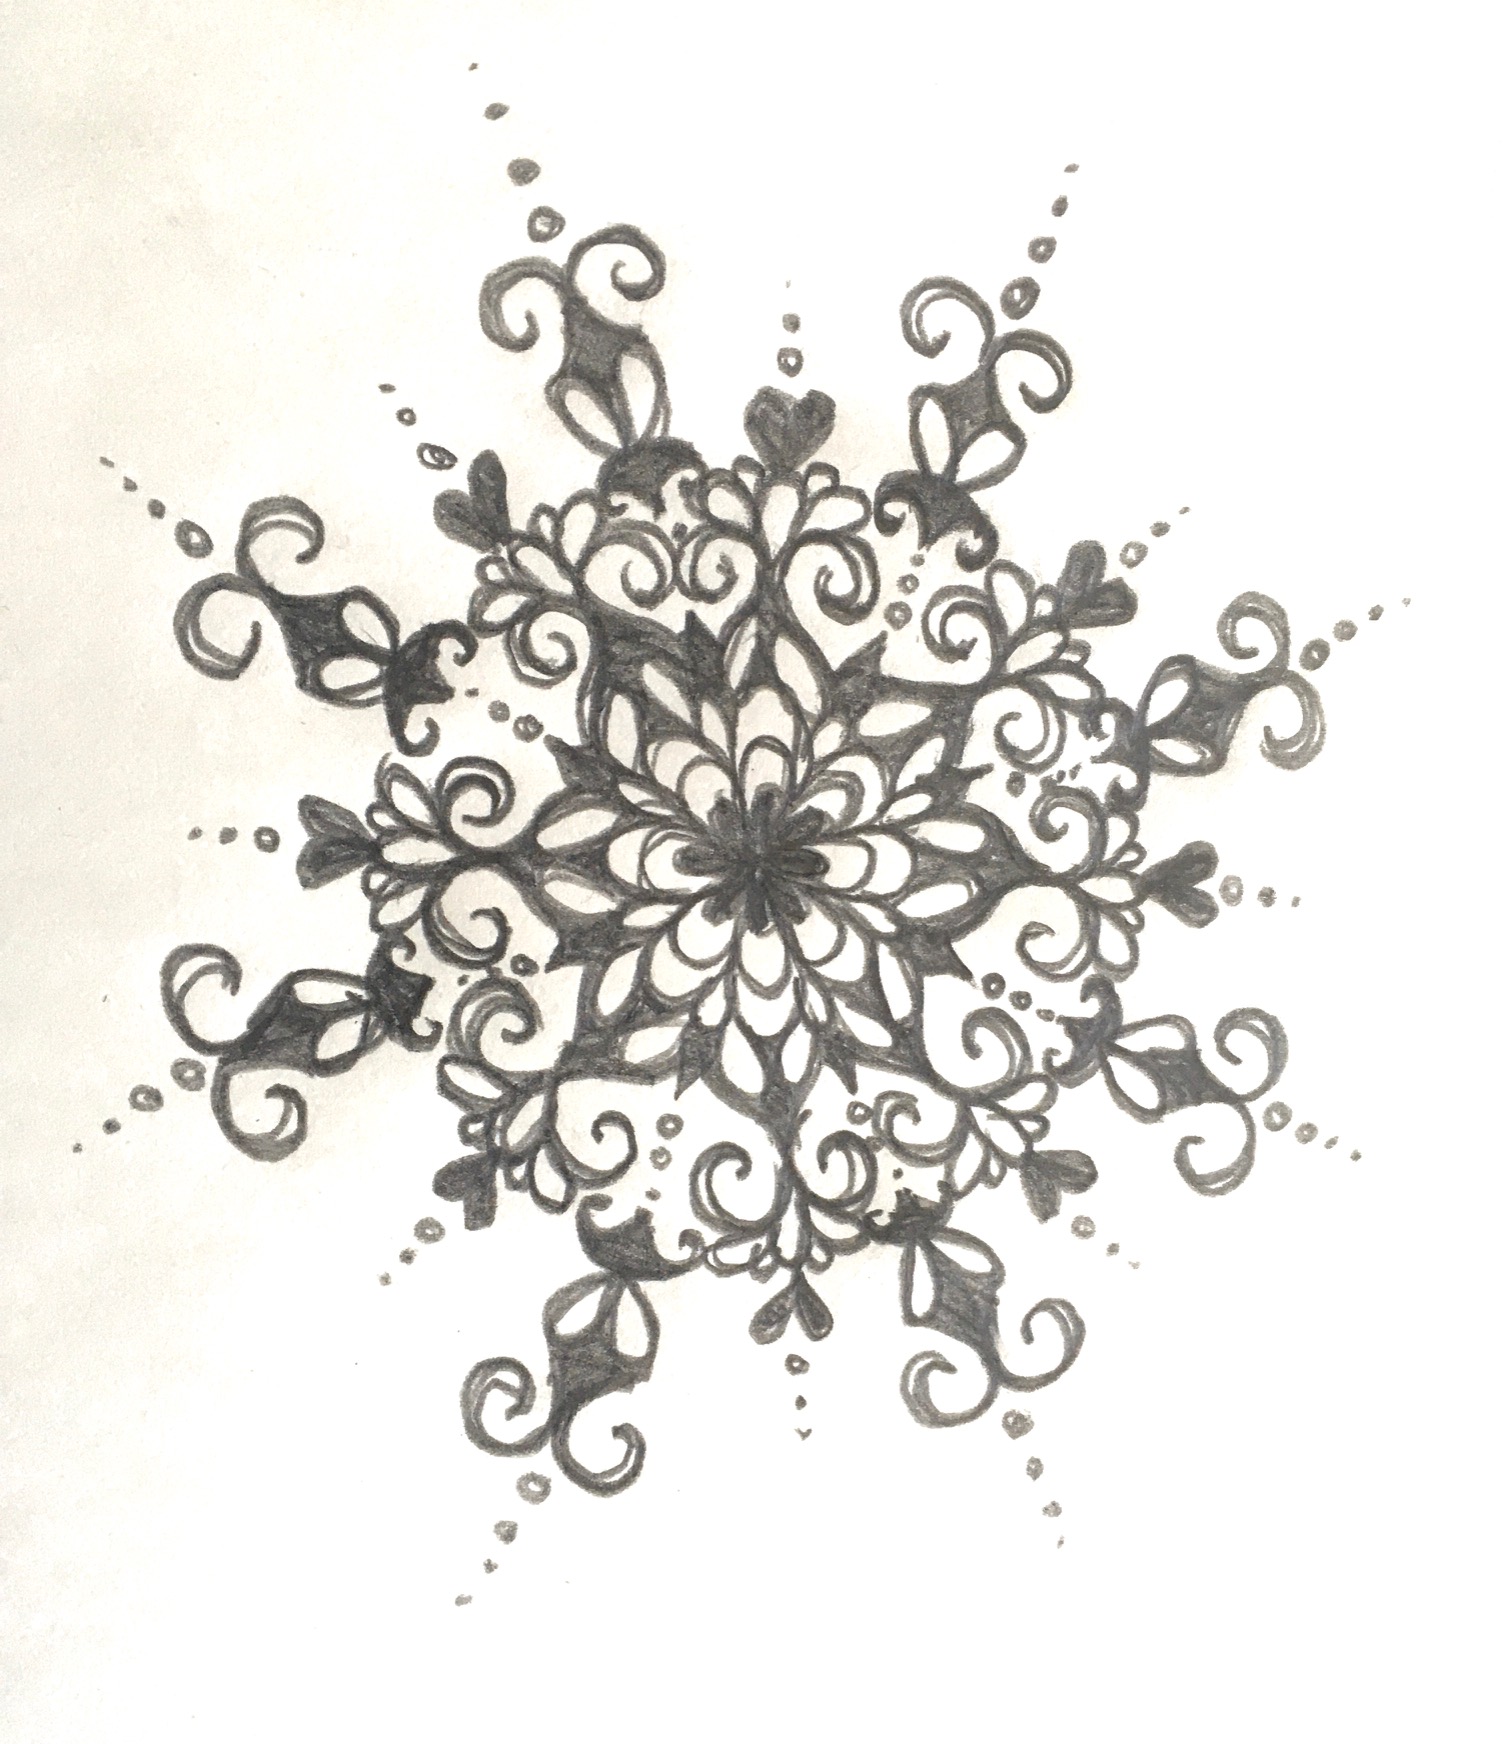 Pencil drawing called a mandala, a circle design that resembles a snowflake.